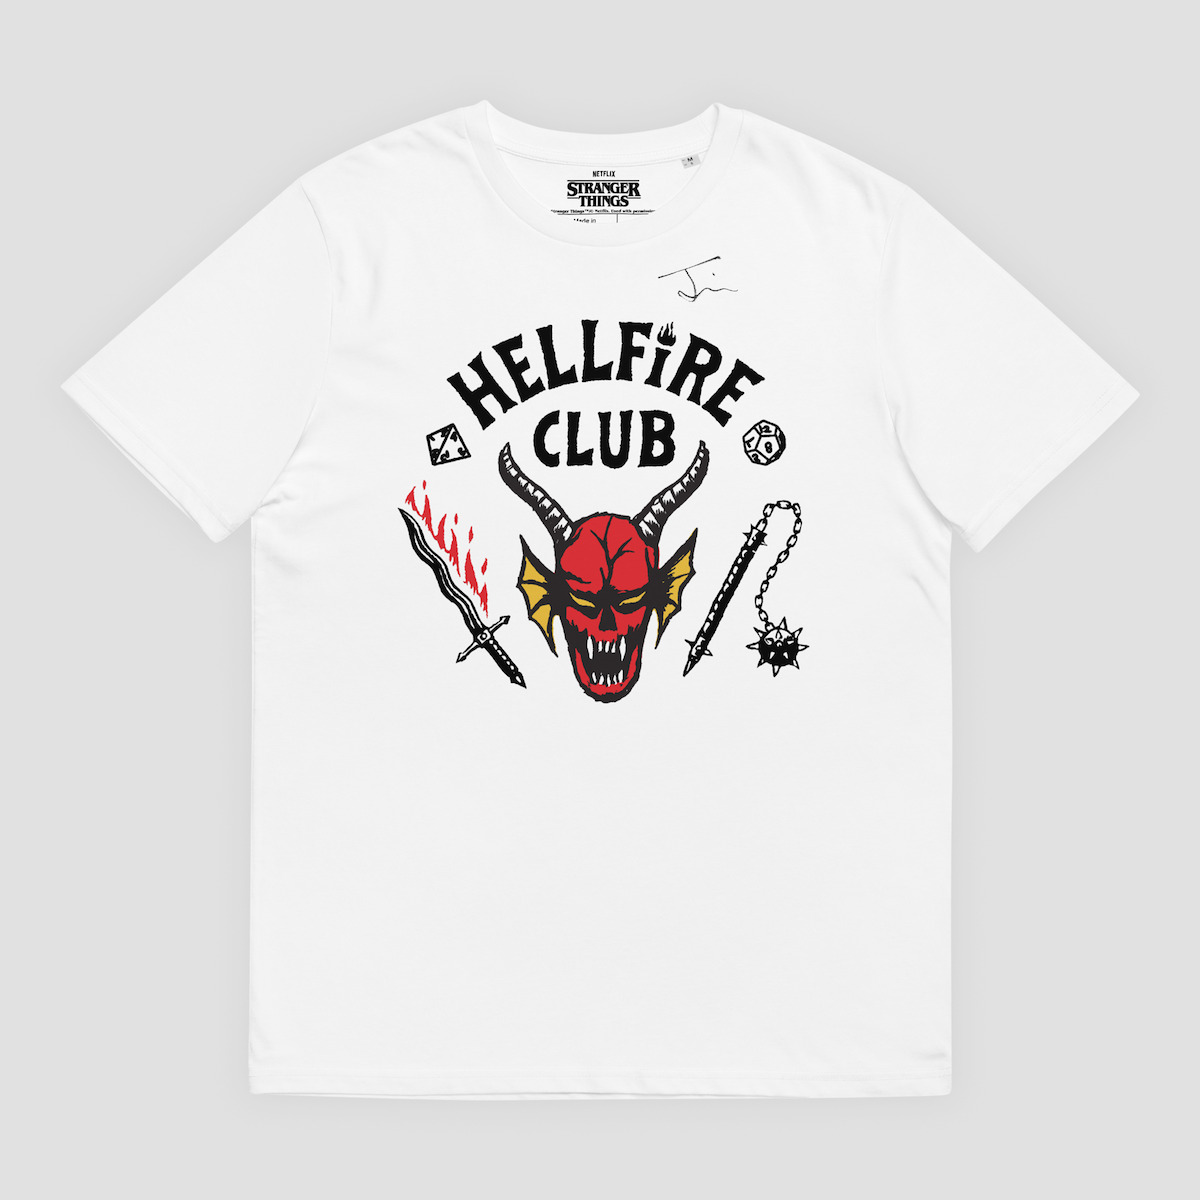 Win a Signed Hellfire Shirt From 'Stranger Things' Star Joe Quinn